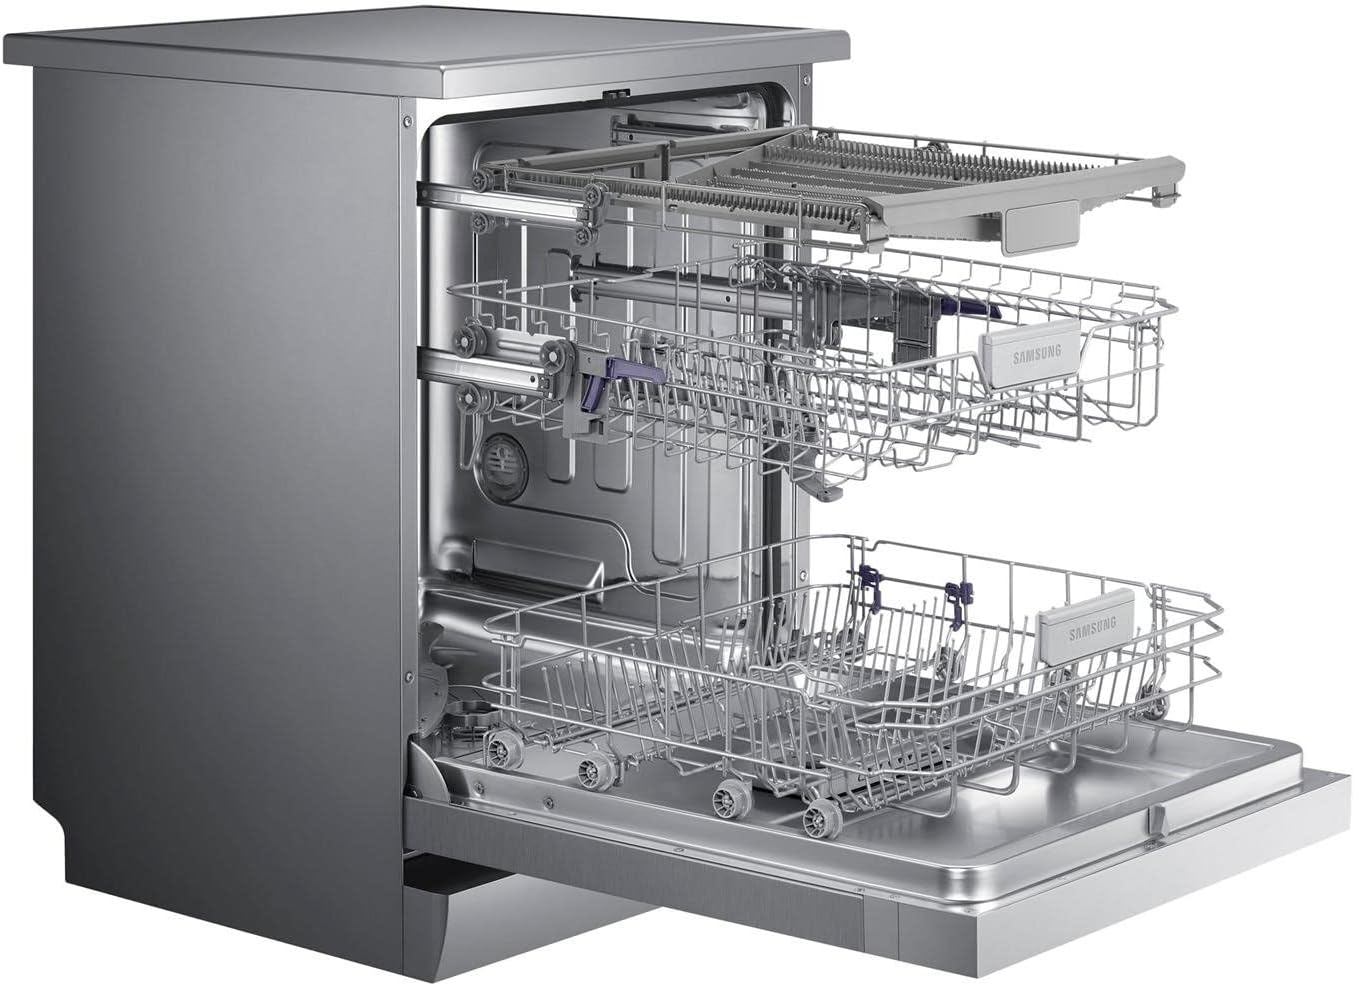 Dishwasher Feature